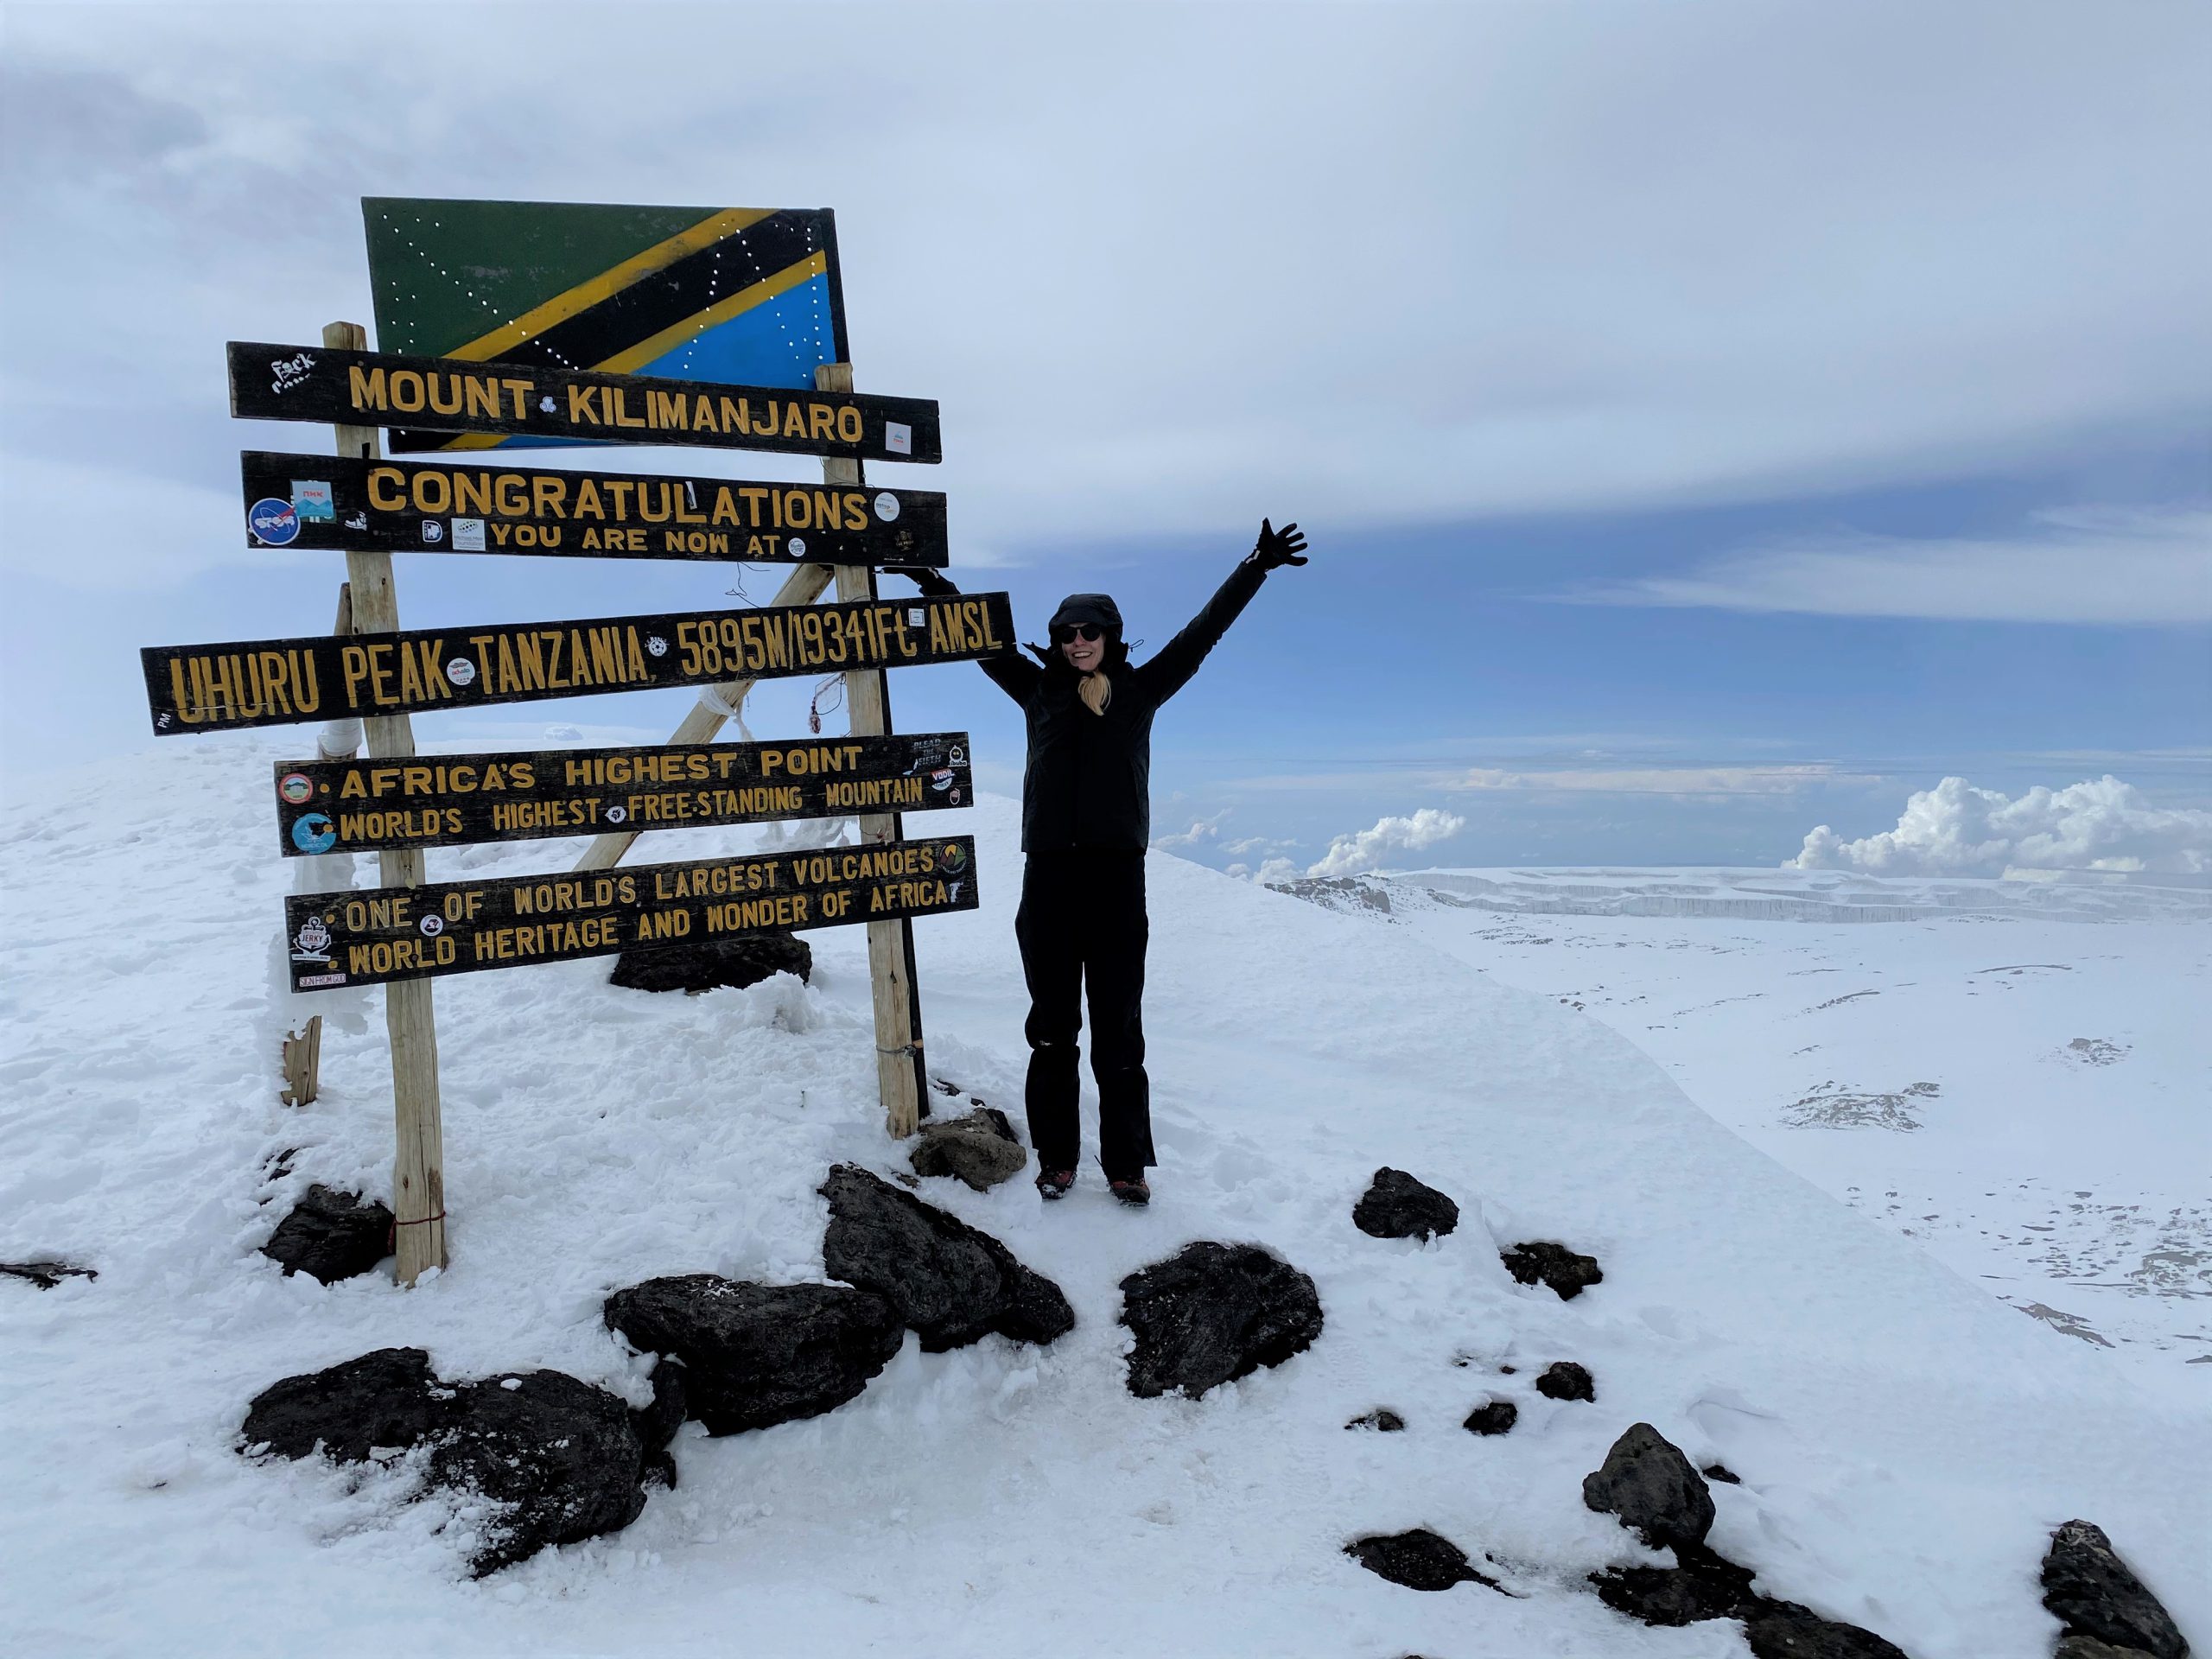 Heroes for Charity - Kilimanjaro Climb